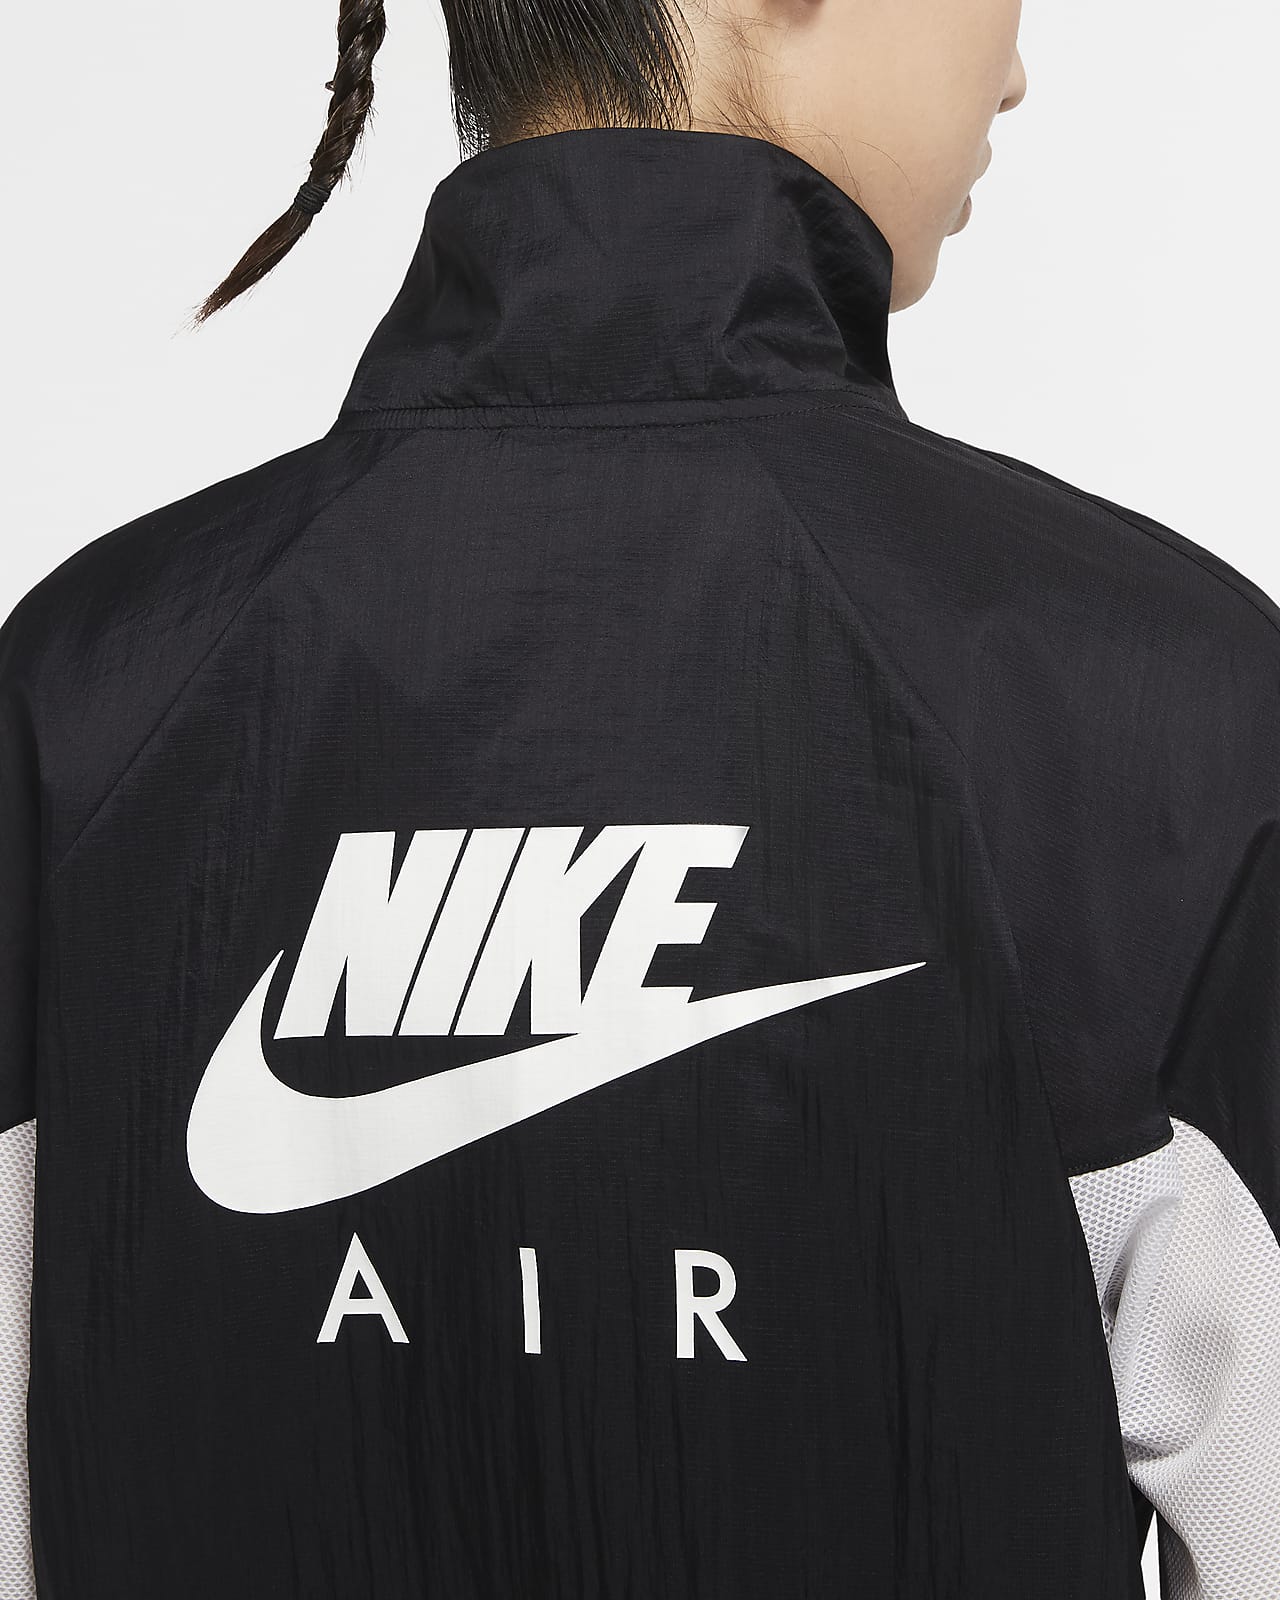 nike air women's full zip running jacket